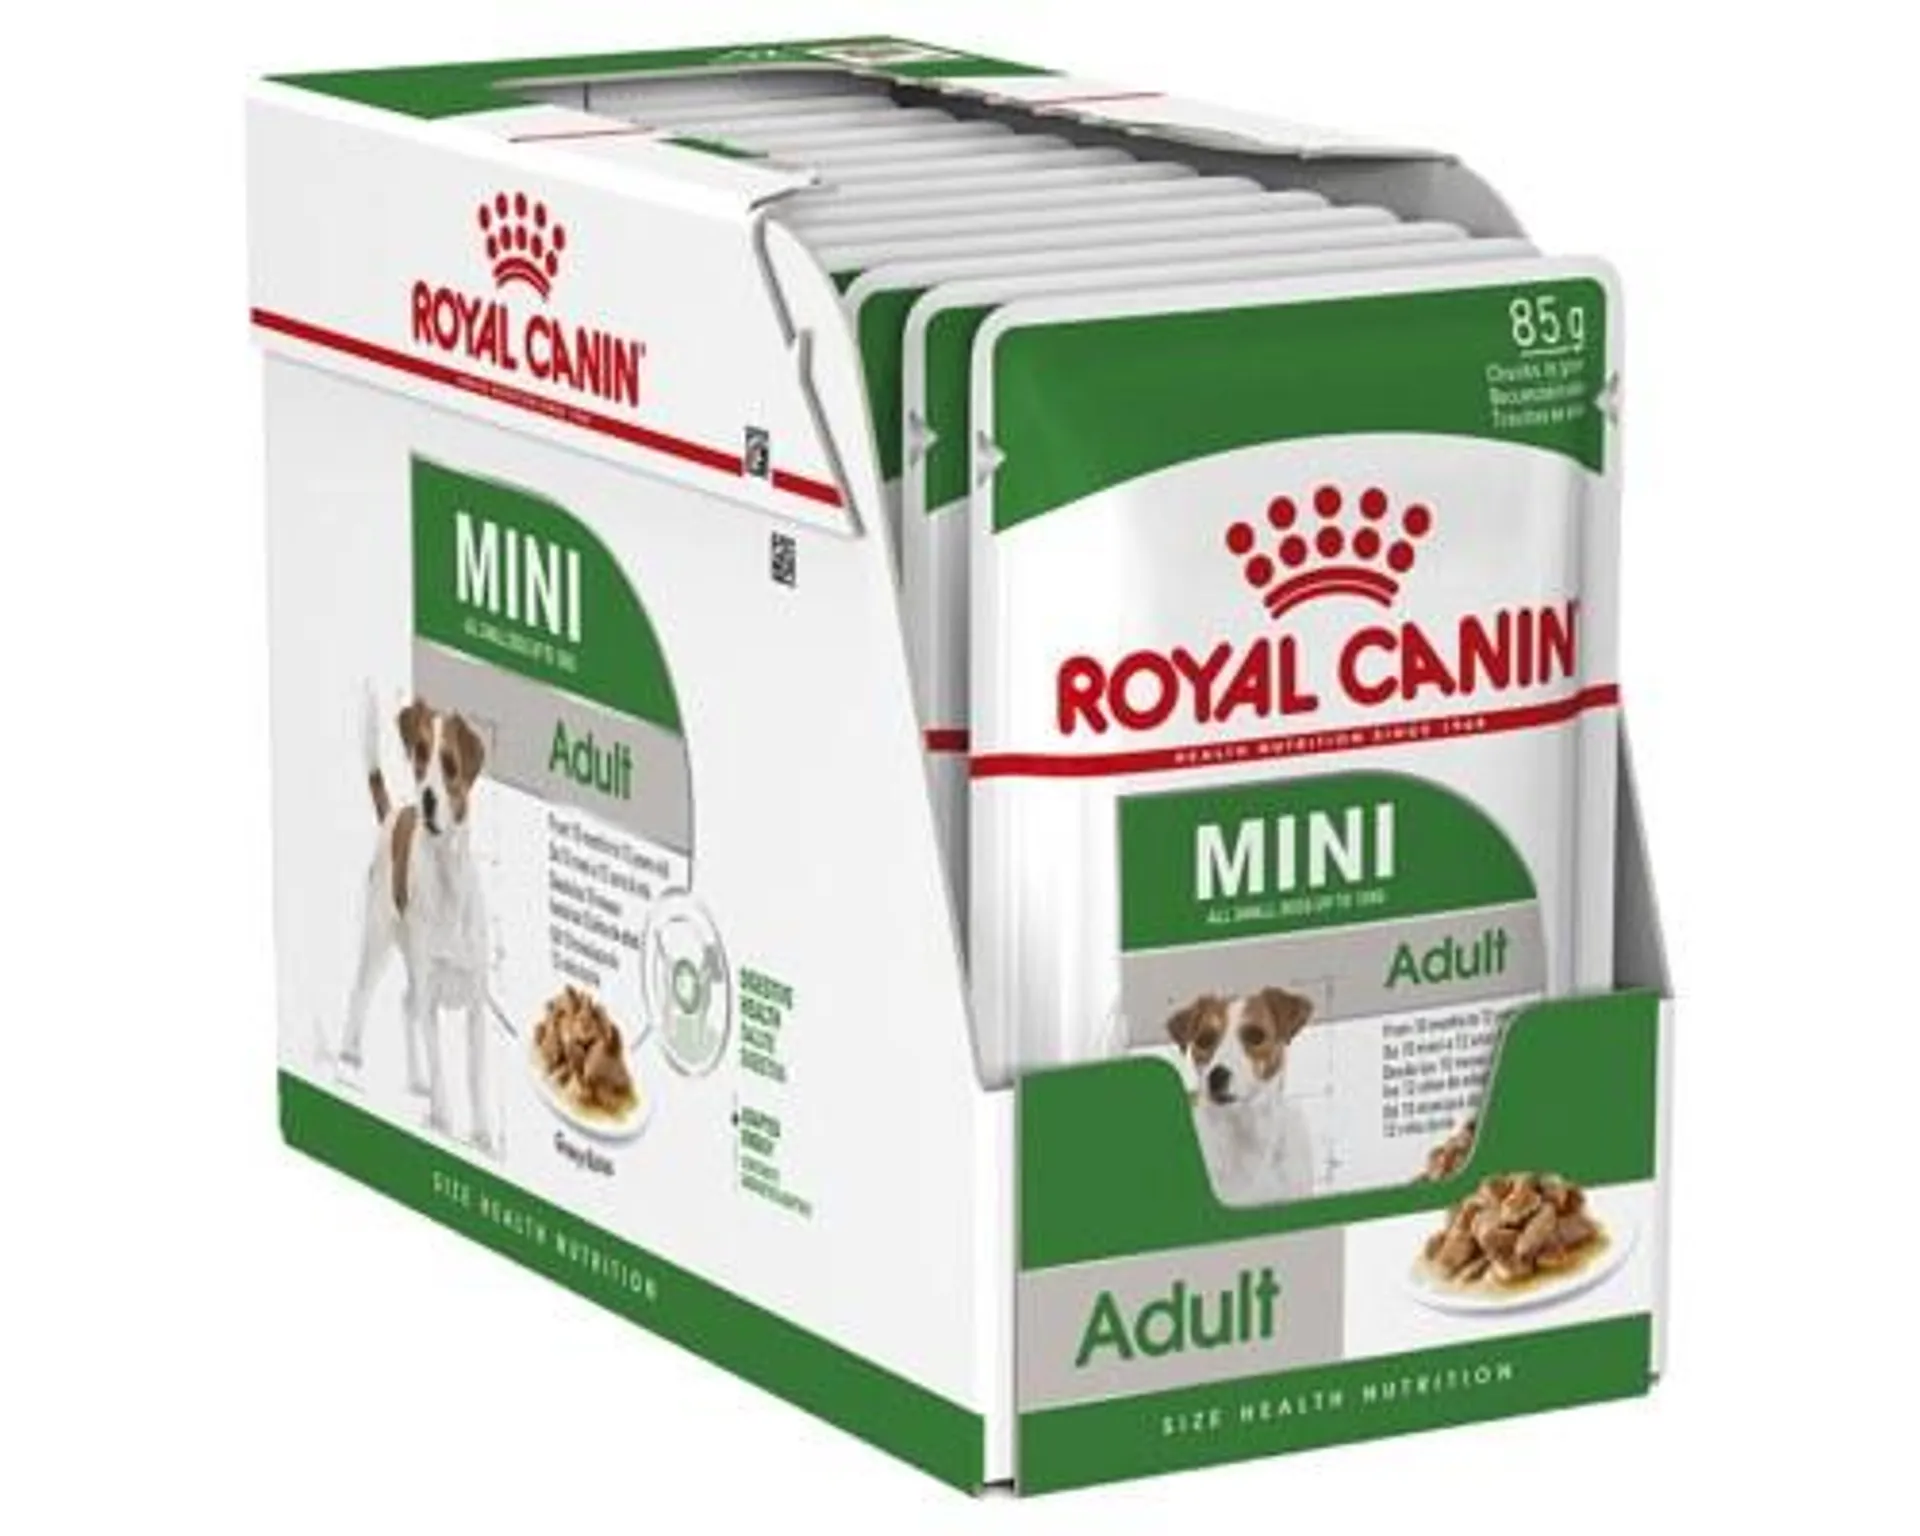 Royal Canin - Mini Adult Dog Wet Food (85g x 12pk)